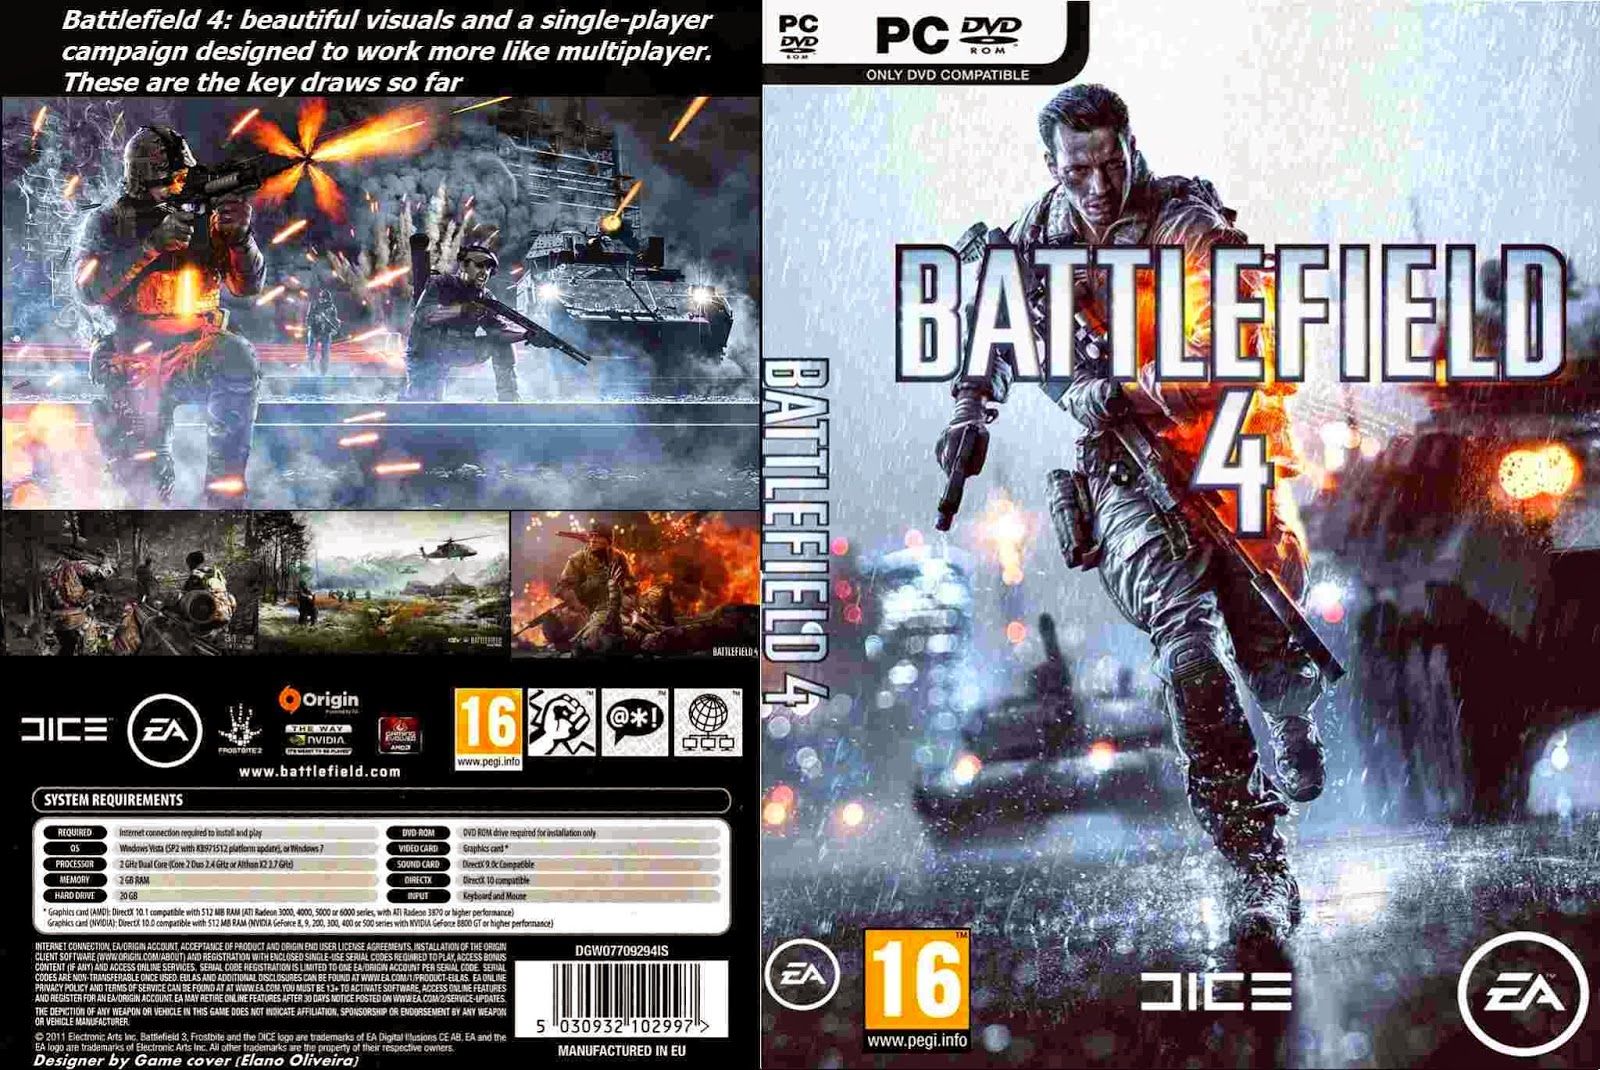 Download Battlefield.4 - RELOADED - PC Game | Verdugo Online